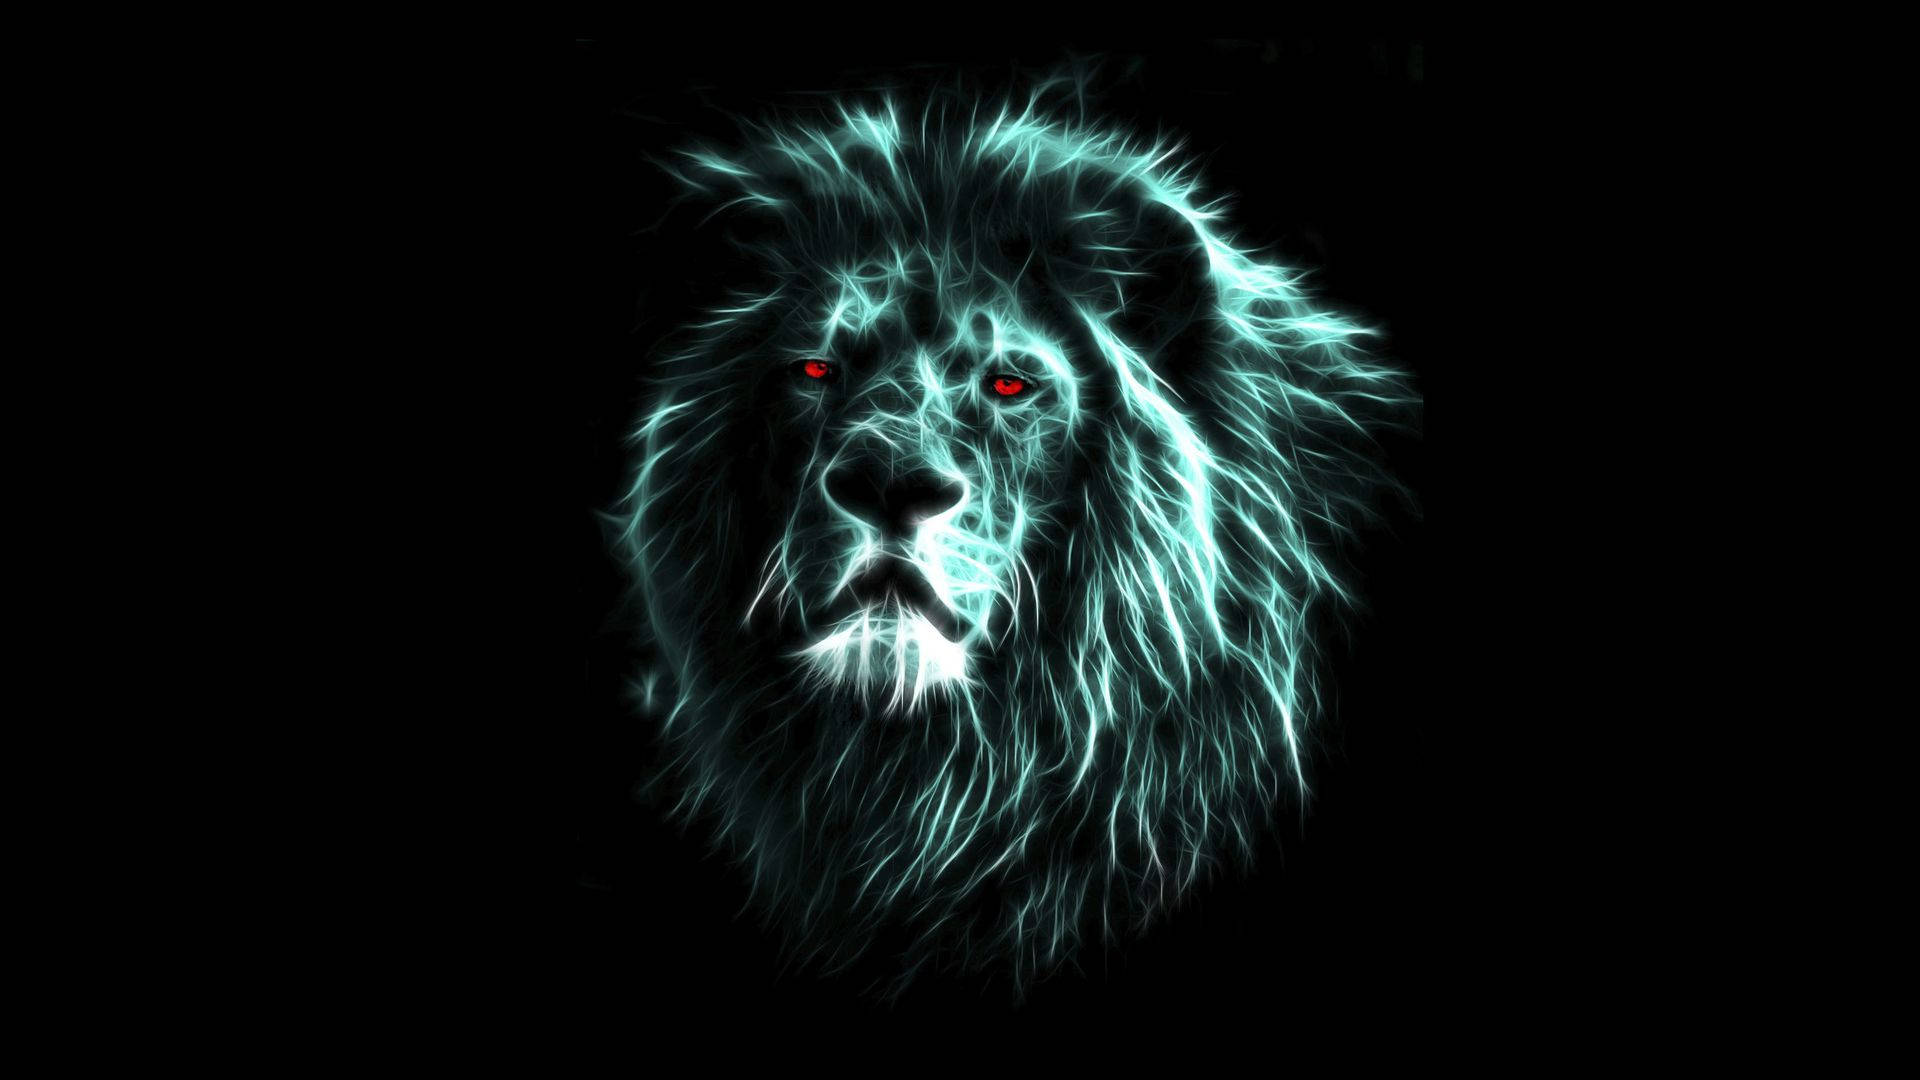 Cool Digital Art Of 3d Lion Picture